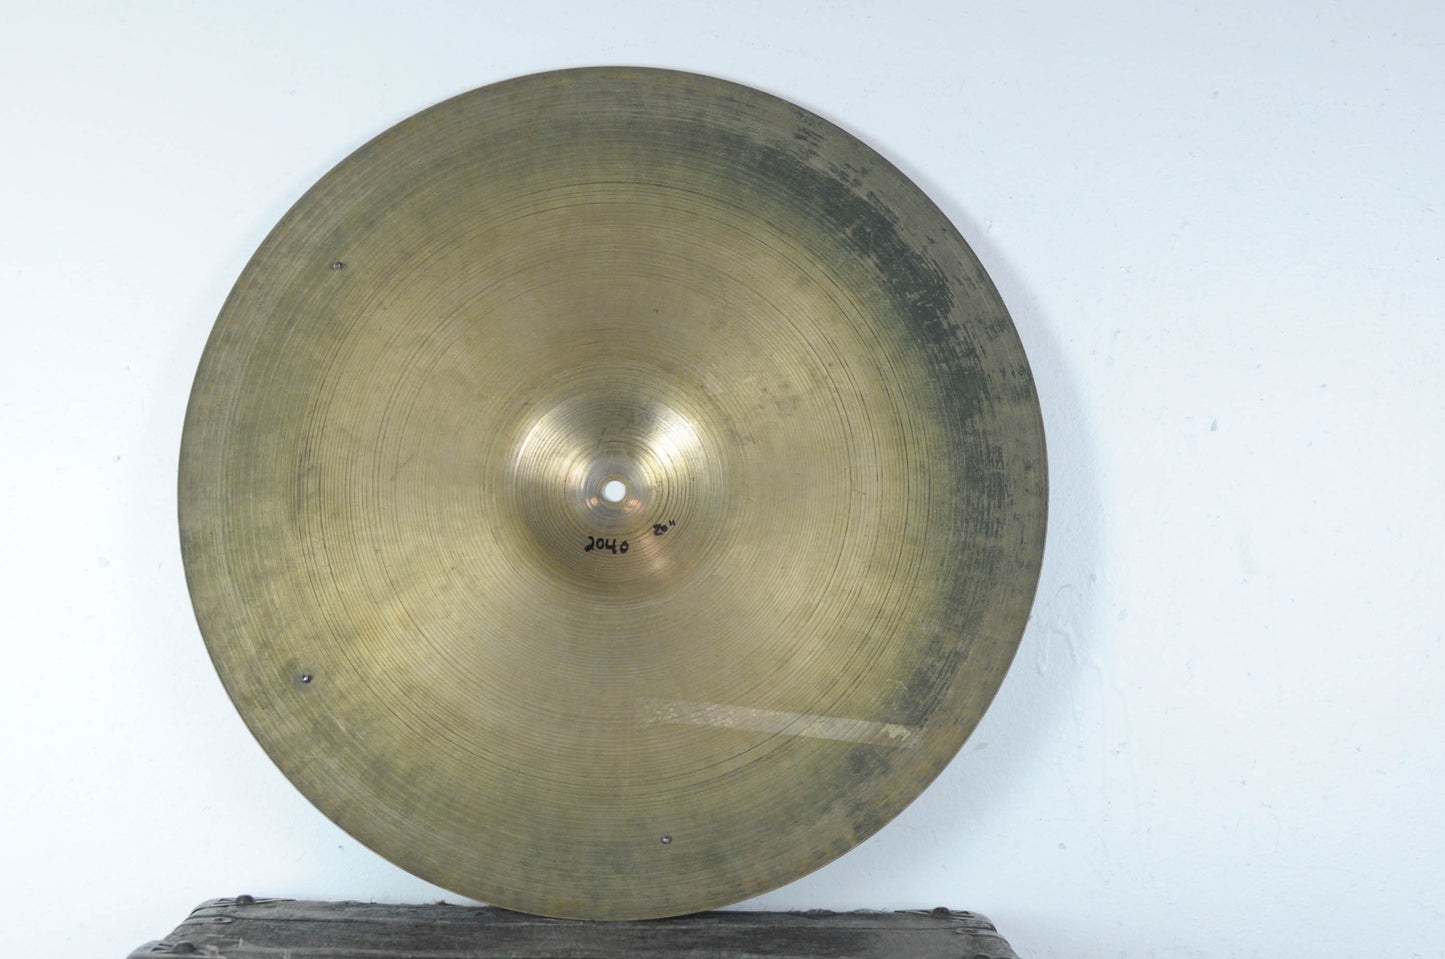 1950s Zildjian A 20" Sizzle RIde Cymbal 2040g